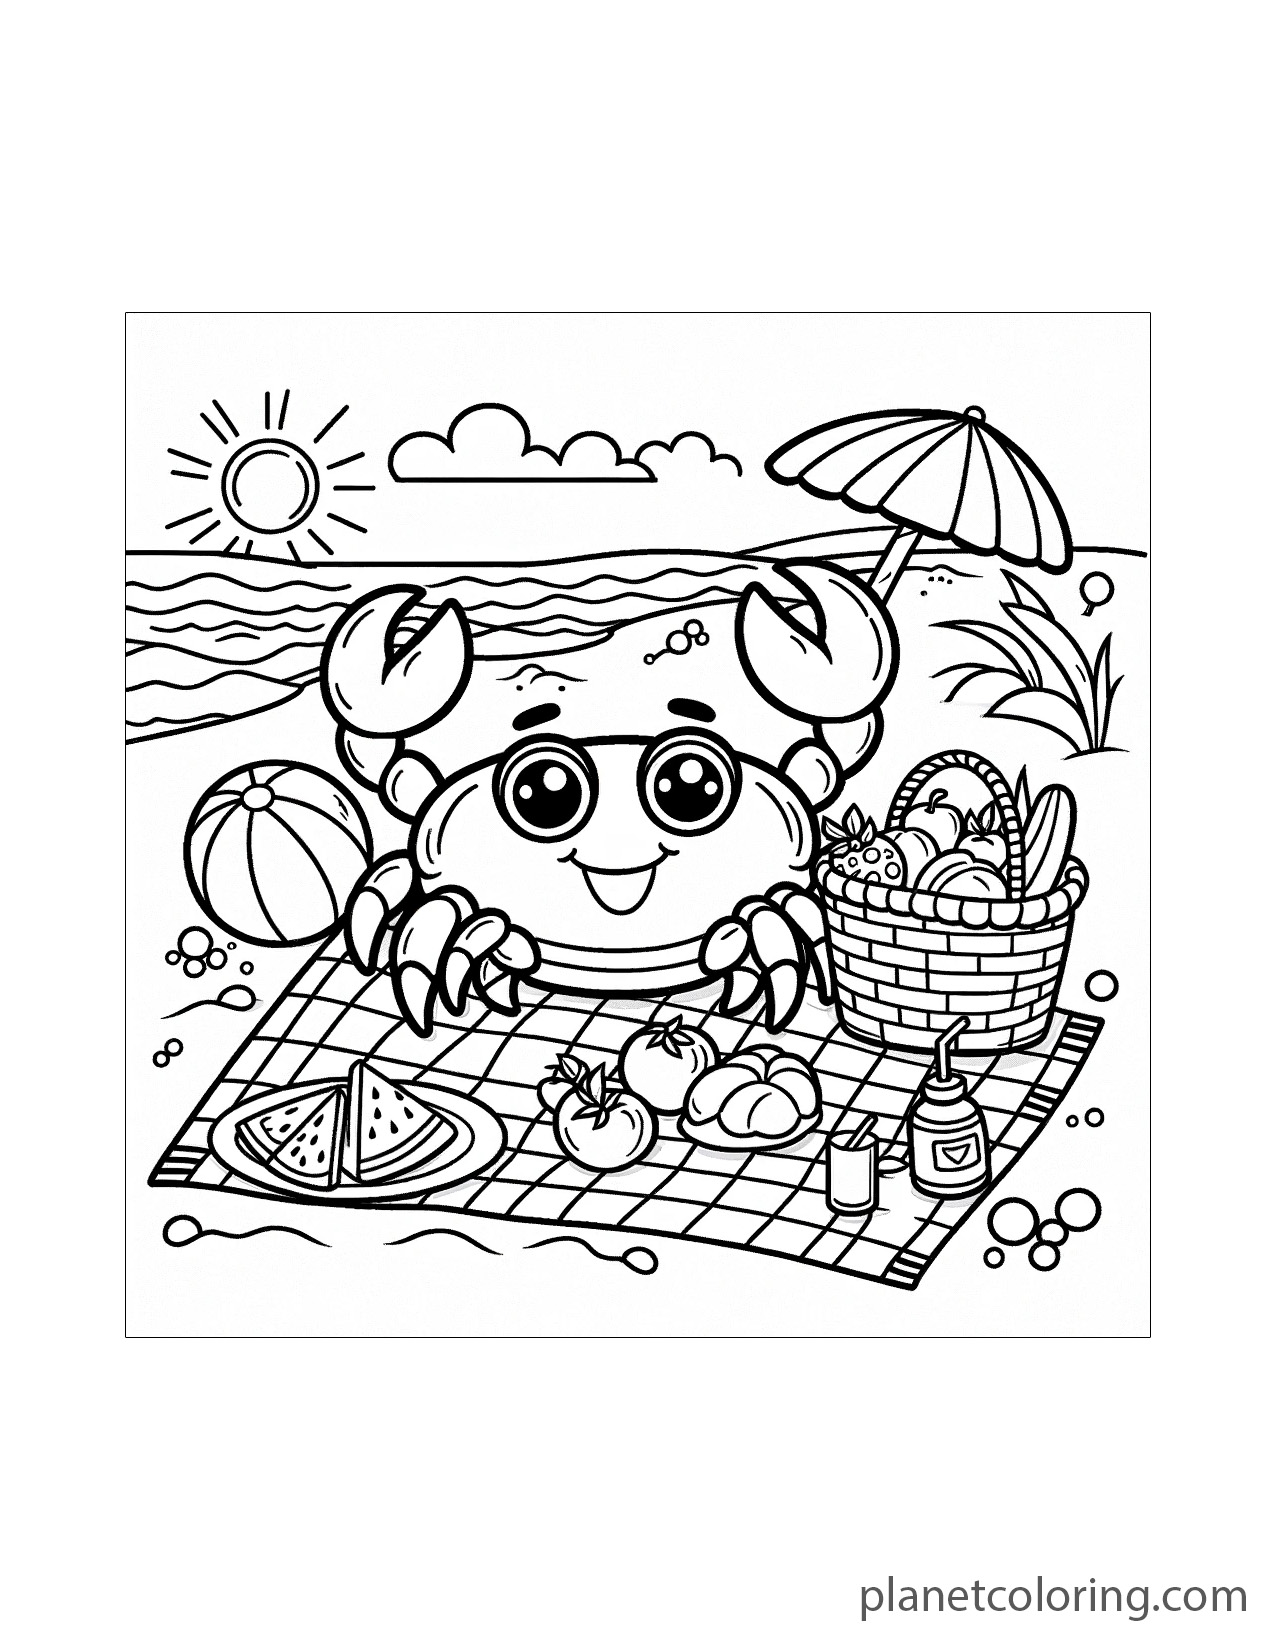 Crab on a picnic